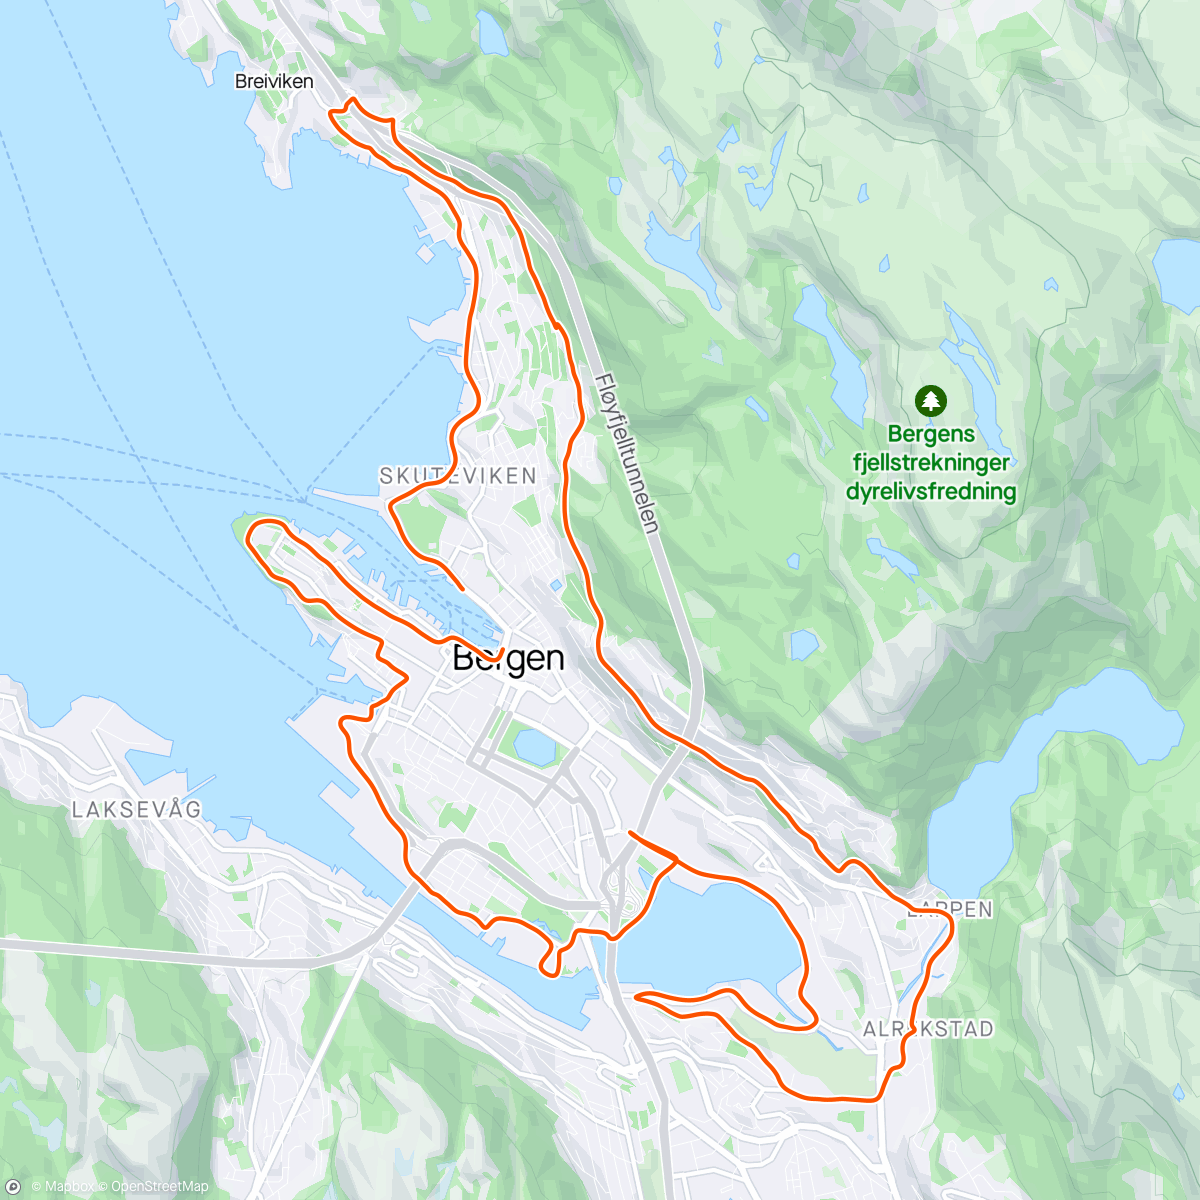 「Bergen by halv」活動的地圖